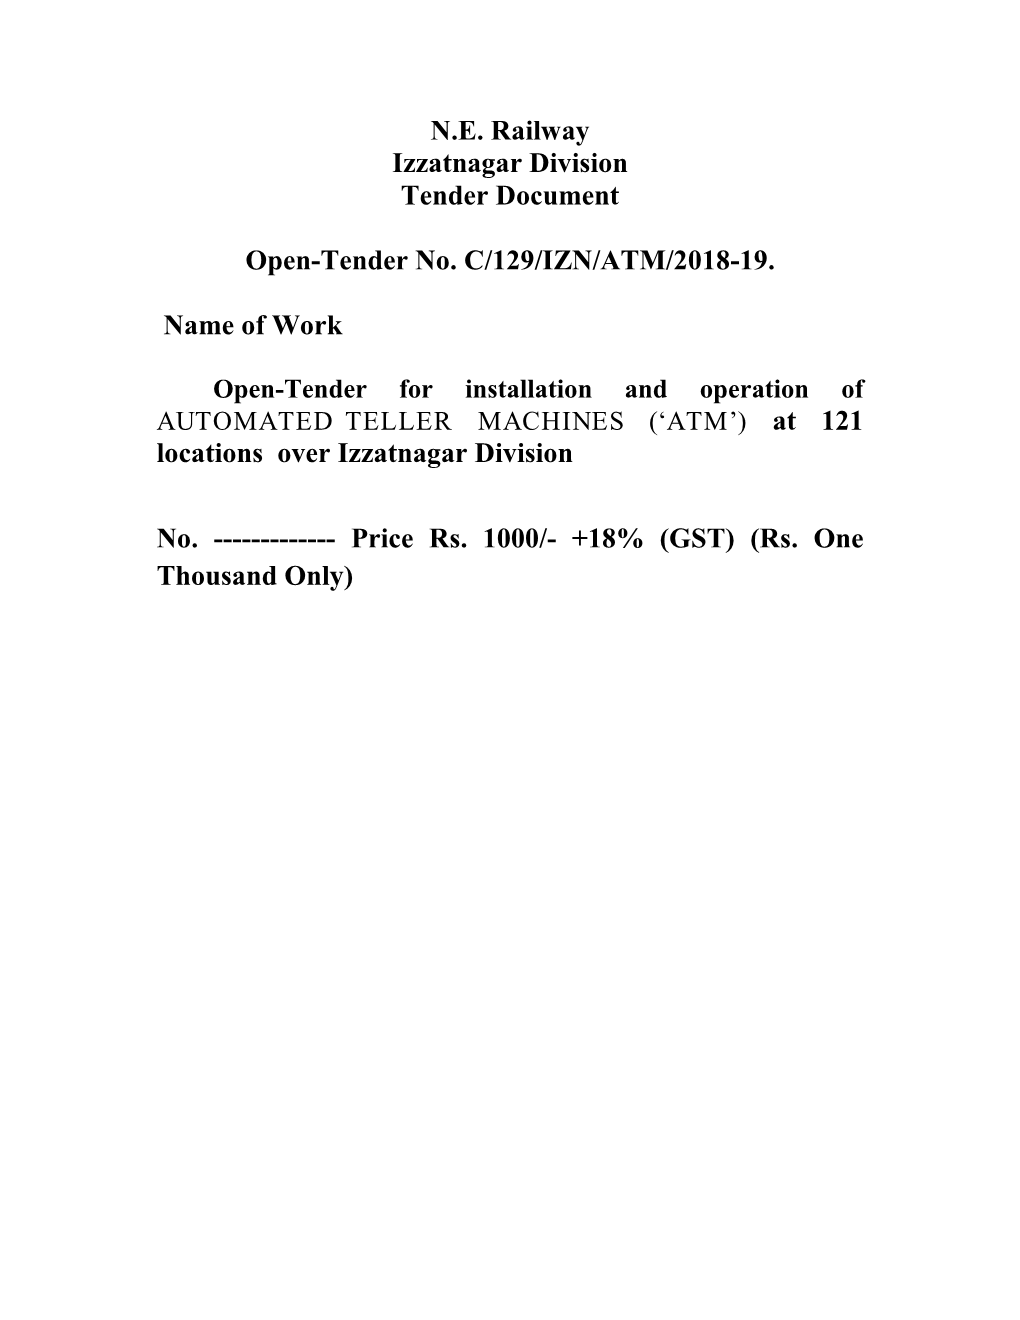 N.E. Railway Izzatnagar Division Tender Document Open-Tender No. C/129/IZN/ATM/2018-19. Name of Work Locations Over Izzatnagar